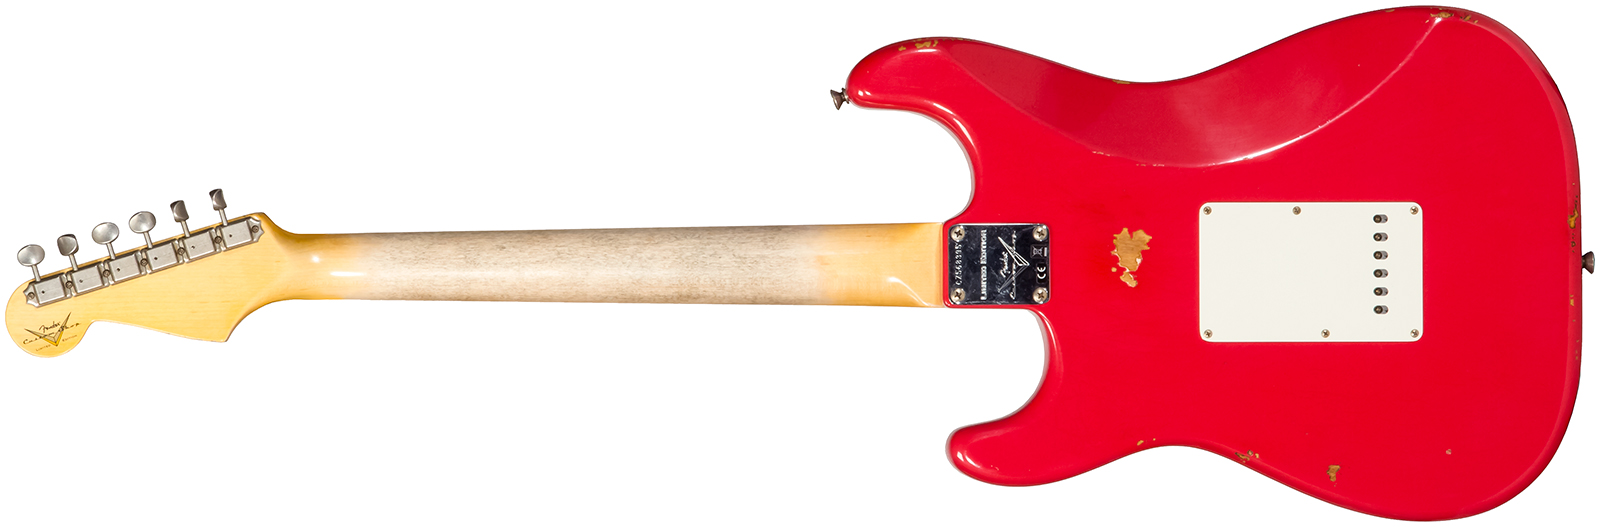 Fender Custom Shop Strat Late 1964 3s Trem Rw #cz568395 - Relic Aged Fiesta Red - Str shape electric guitar - Variation 1